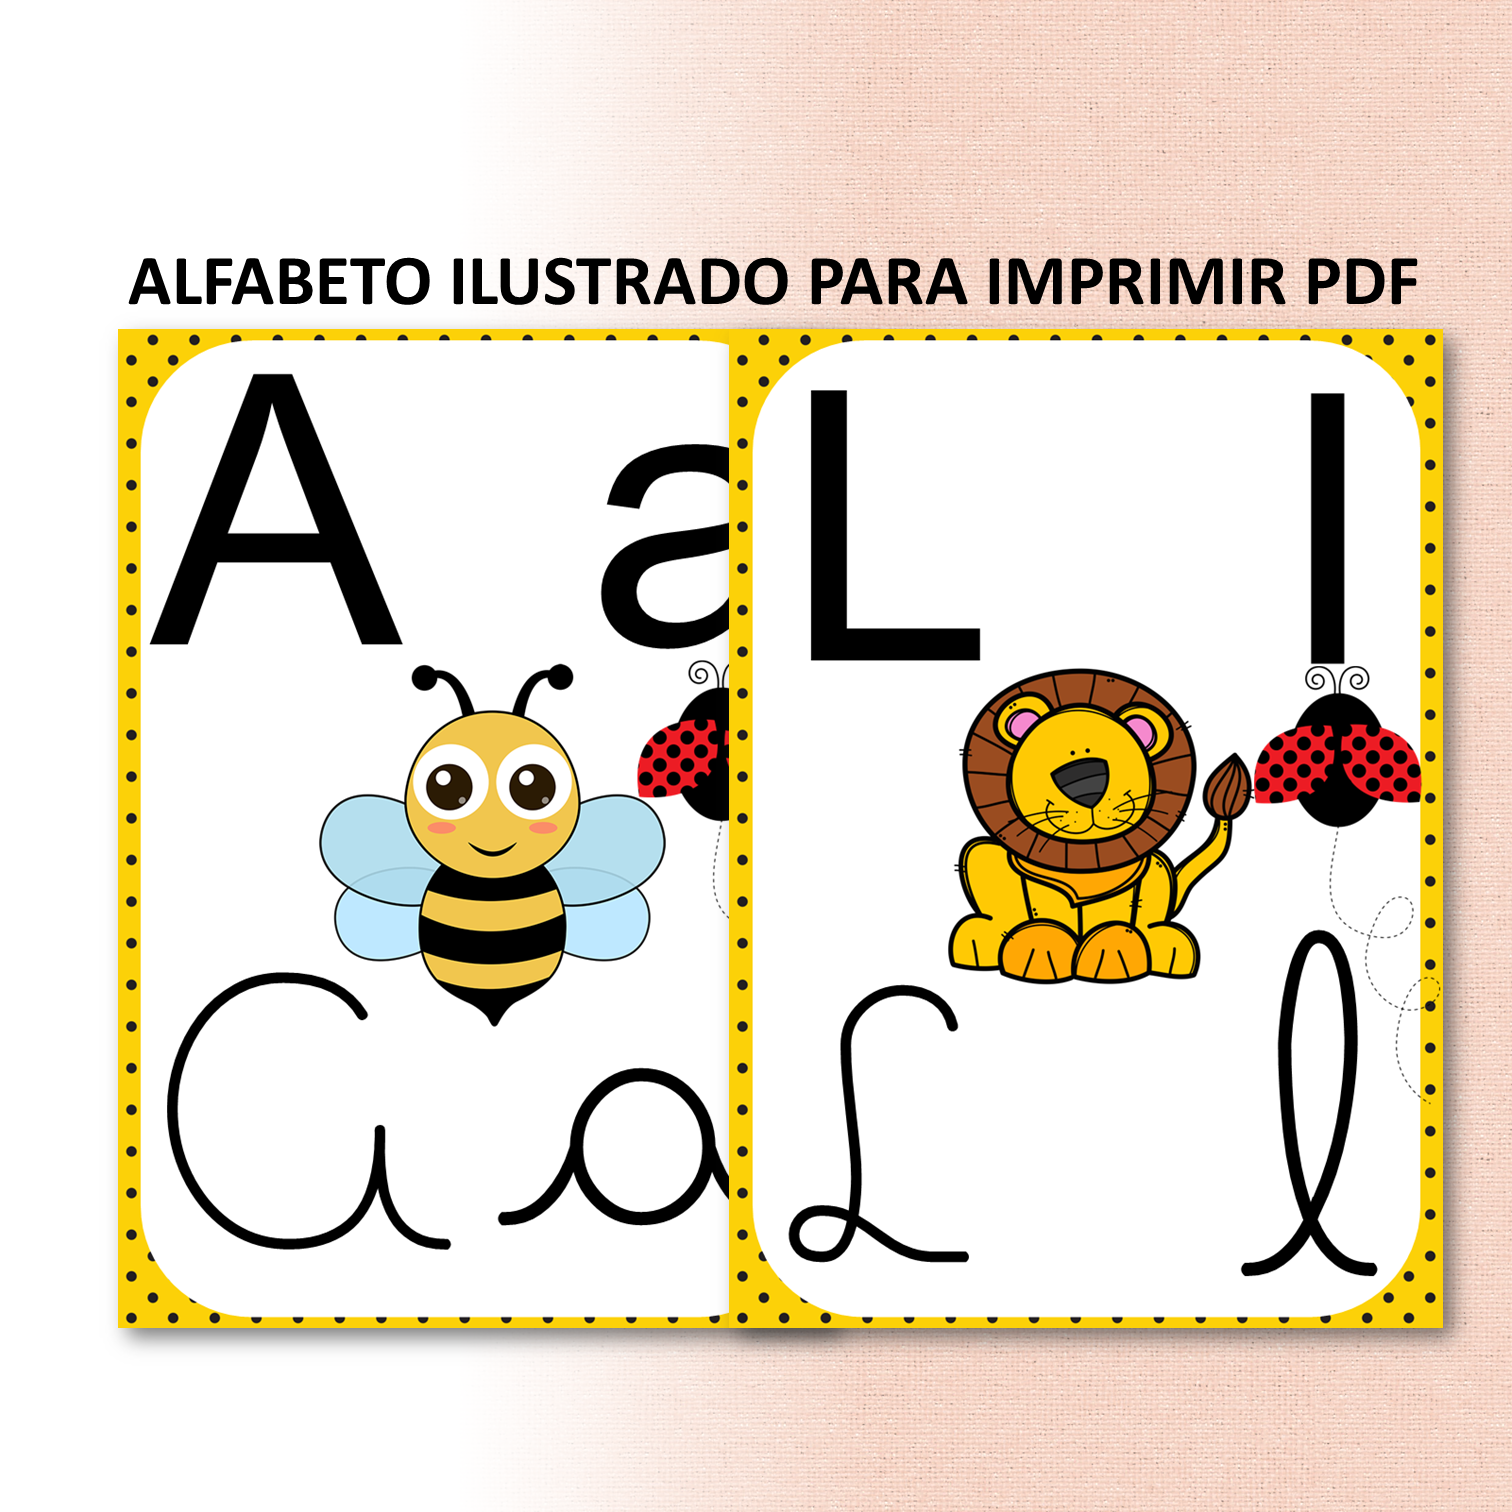 Alfabeto ilustrado para imprimir PDF Clécia Teixeira